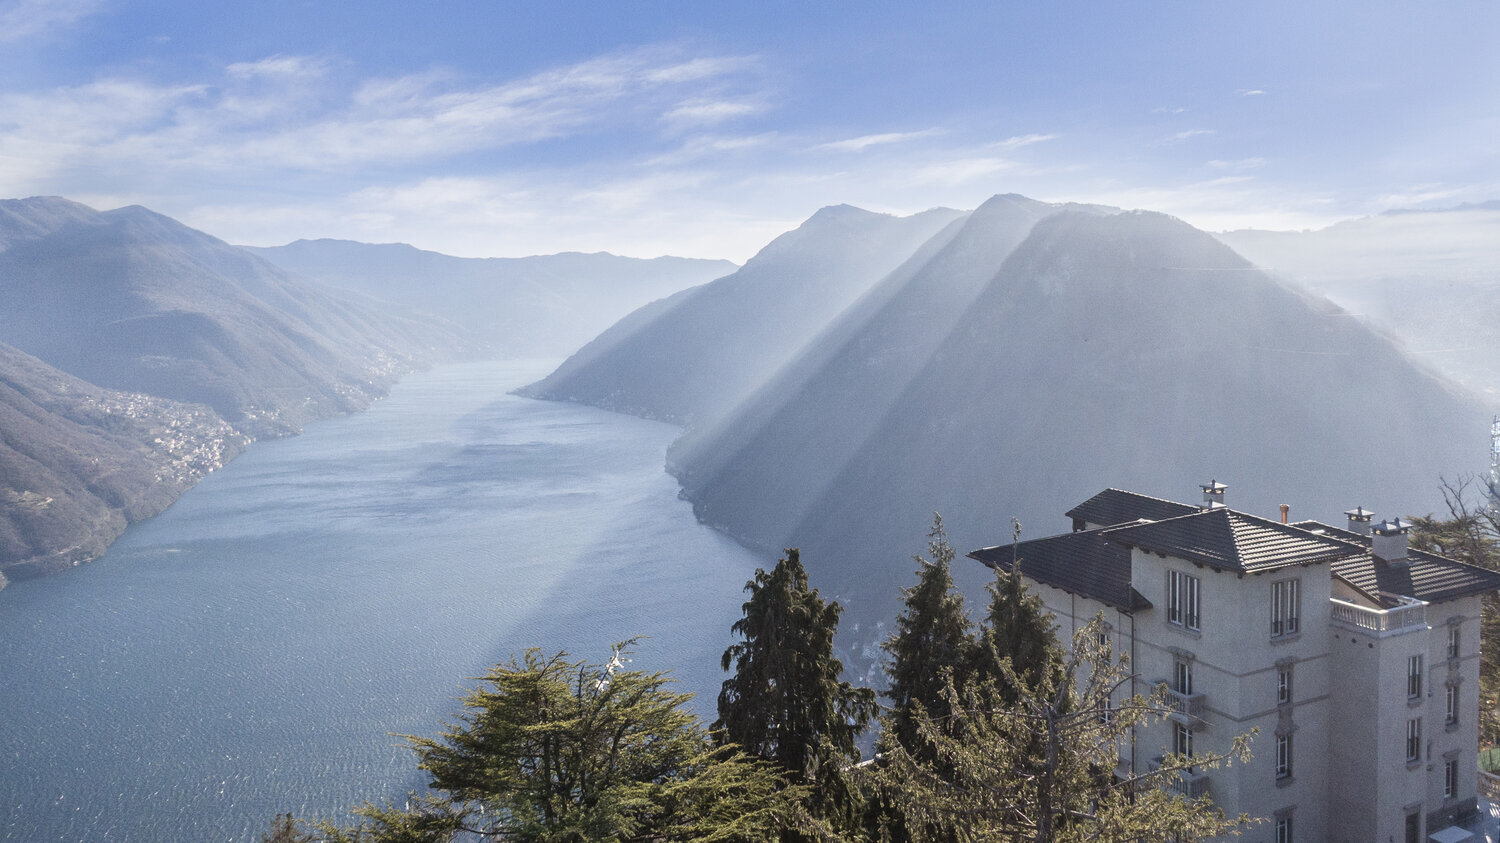 Francis York Villa Peduzzi is the Ultimate Luxury Vacation Home on Lake Como17.jpg